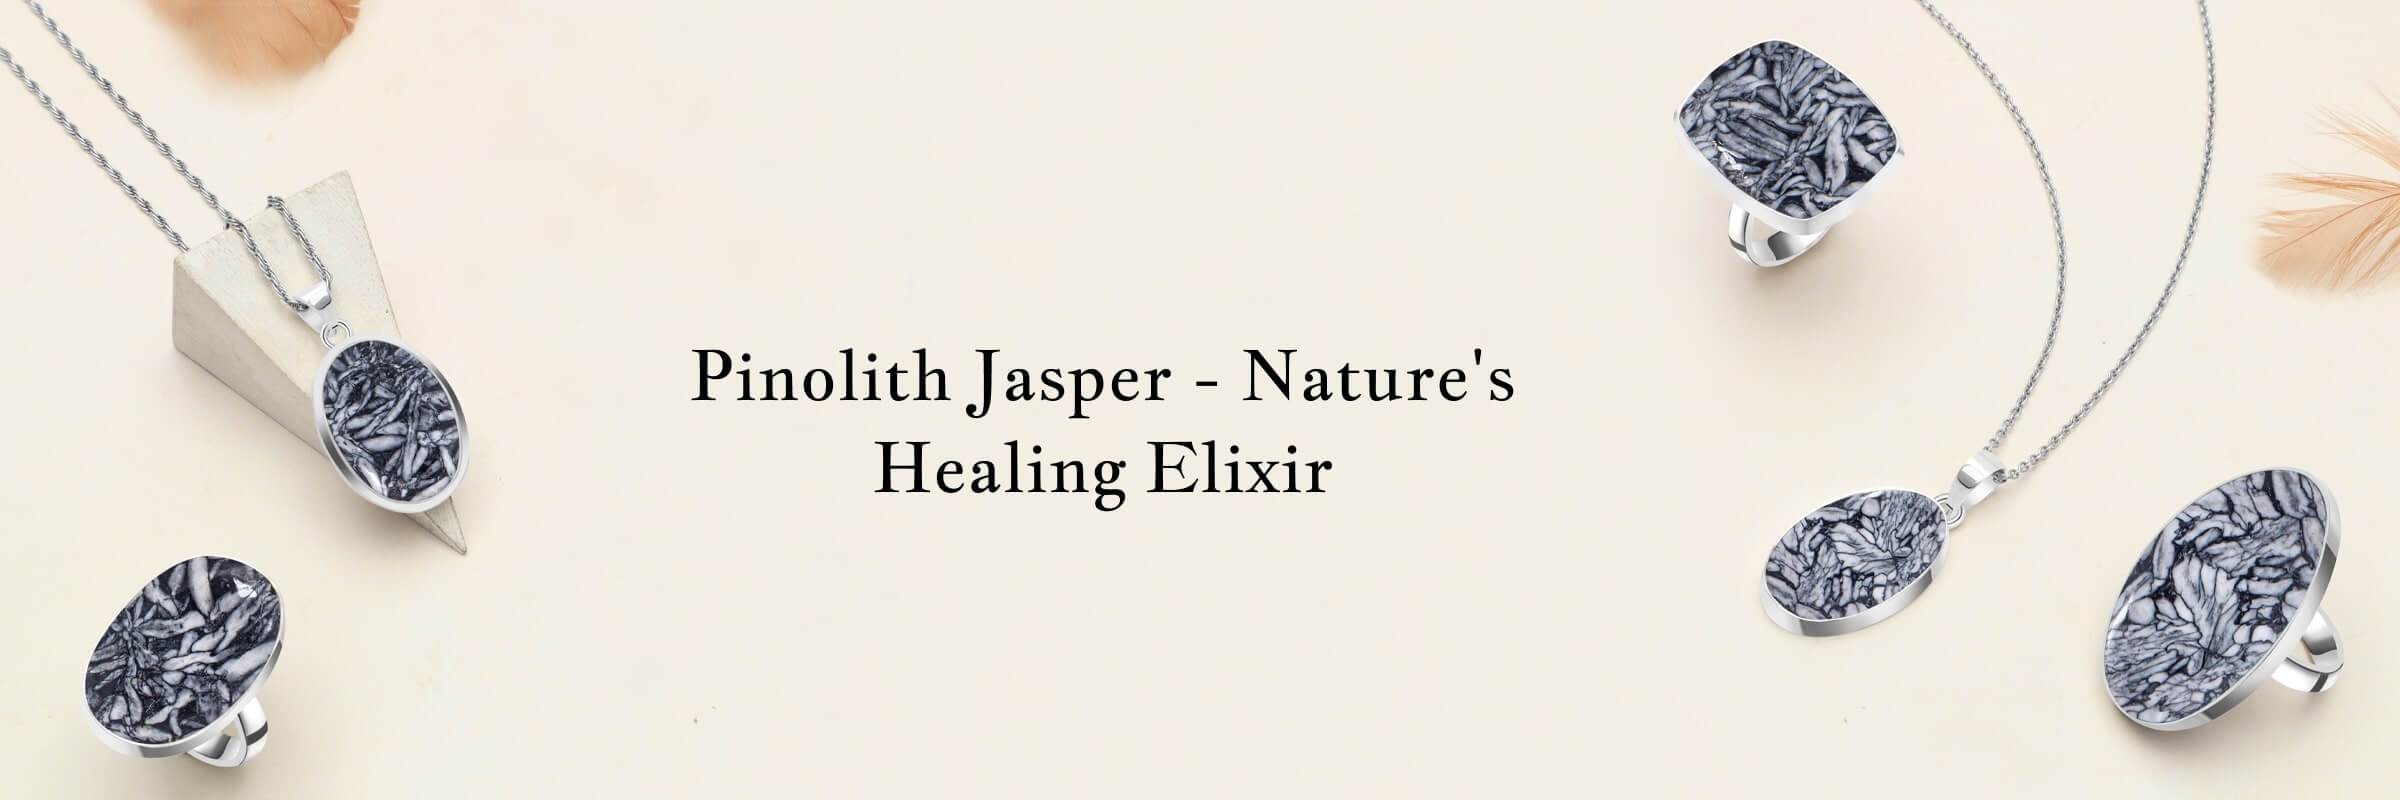 Pinolith Jasper Healing properties and benefits